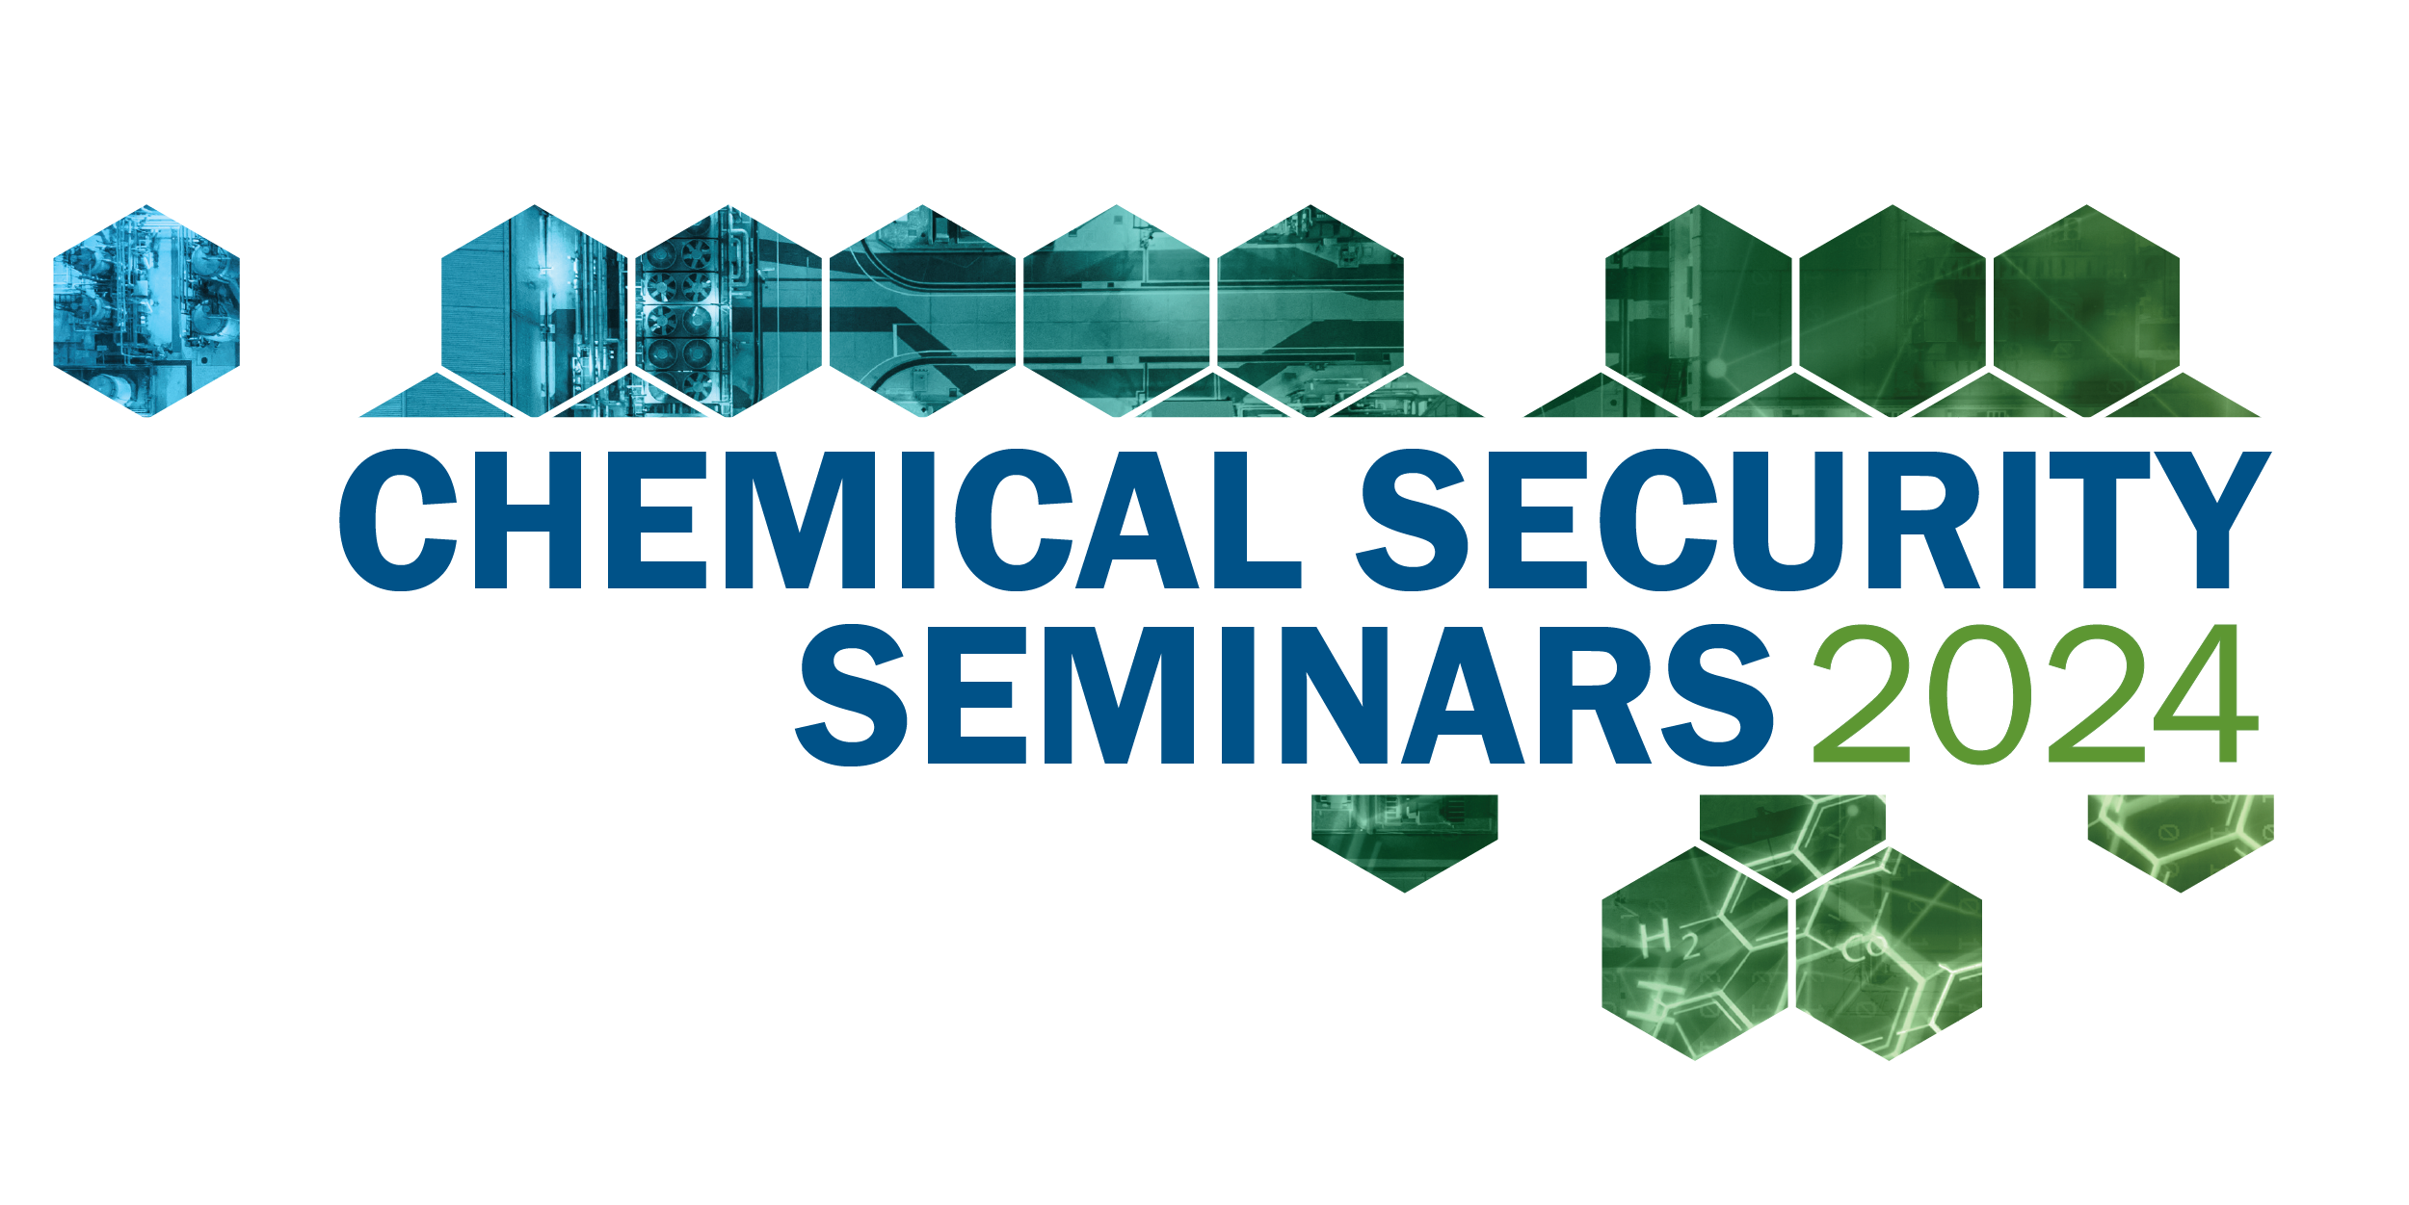 Chemical Security Seminars 2024 event logo